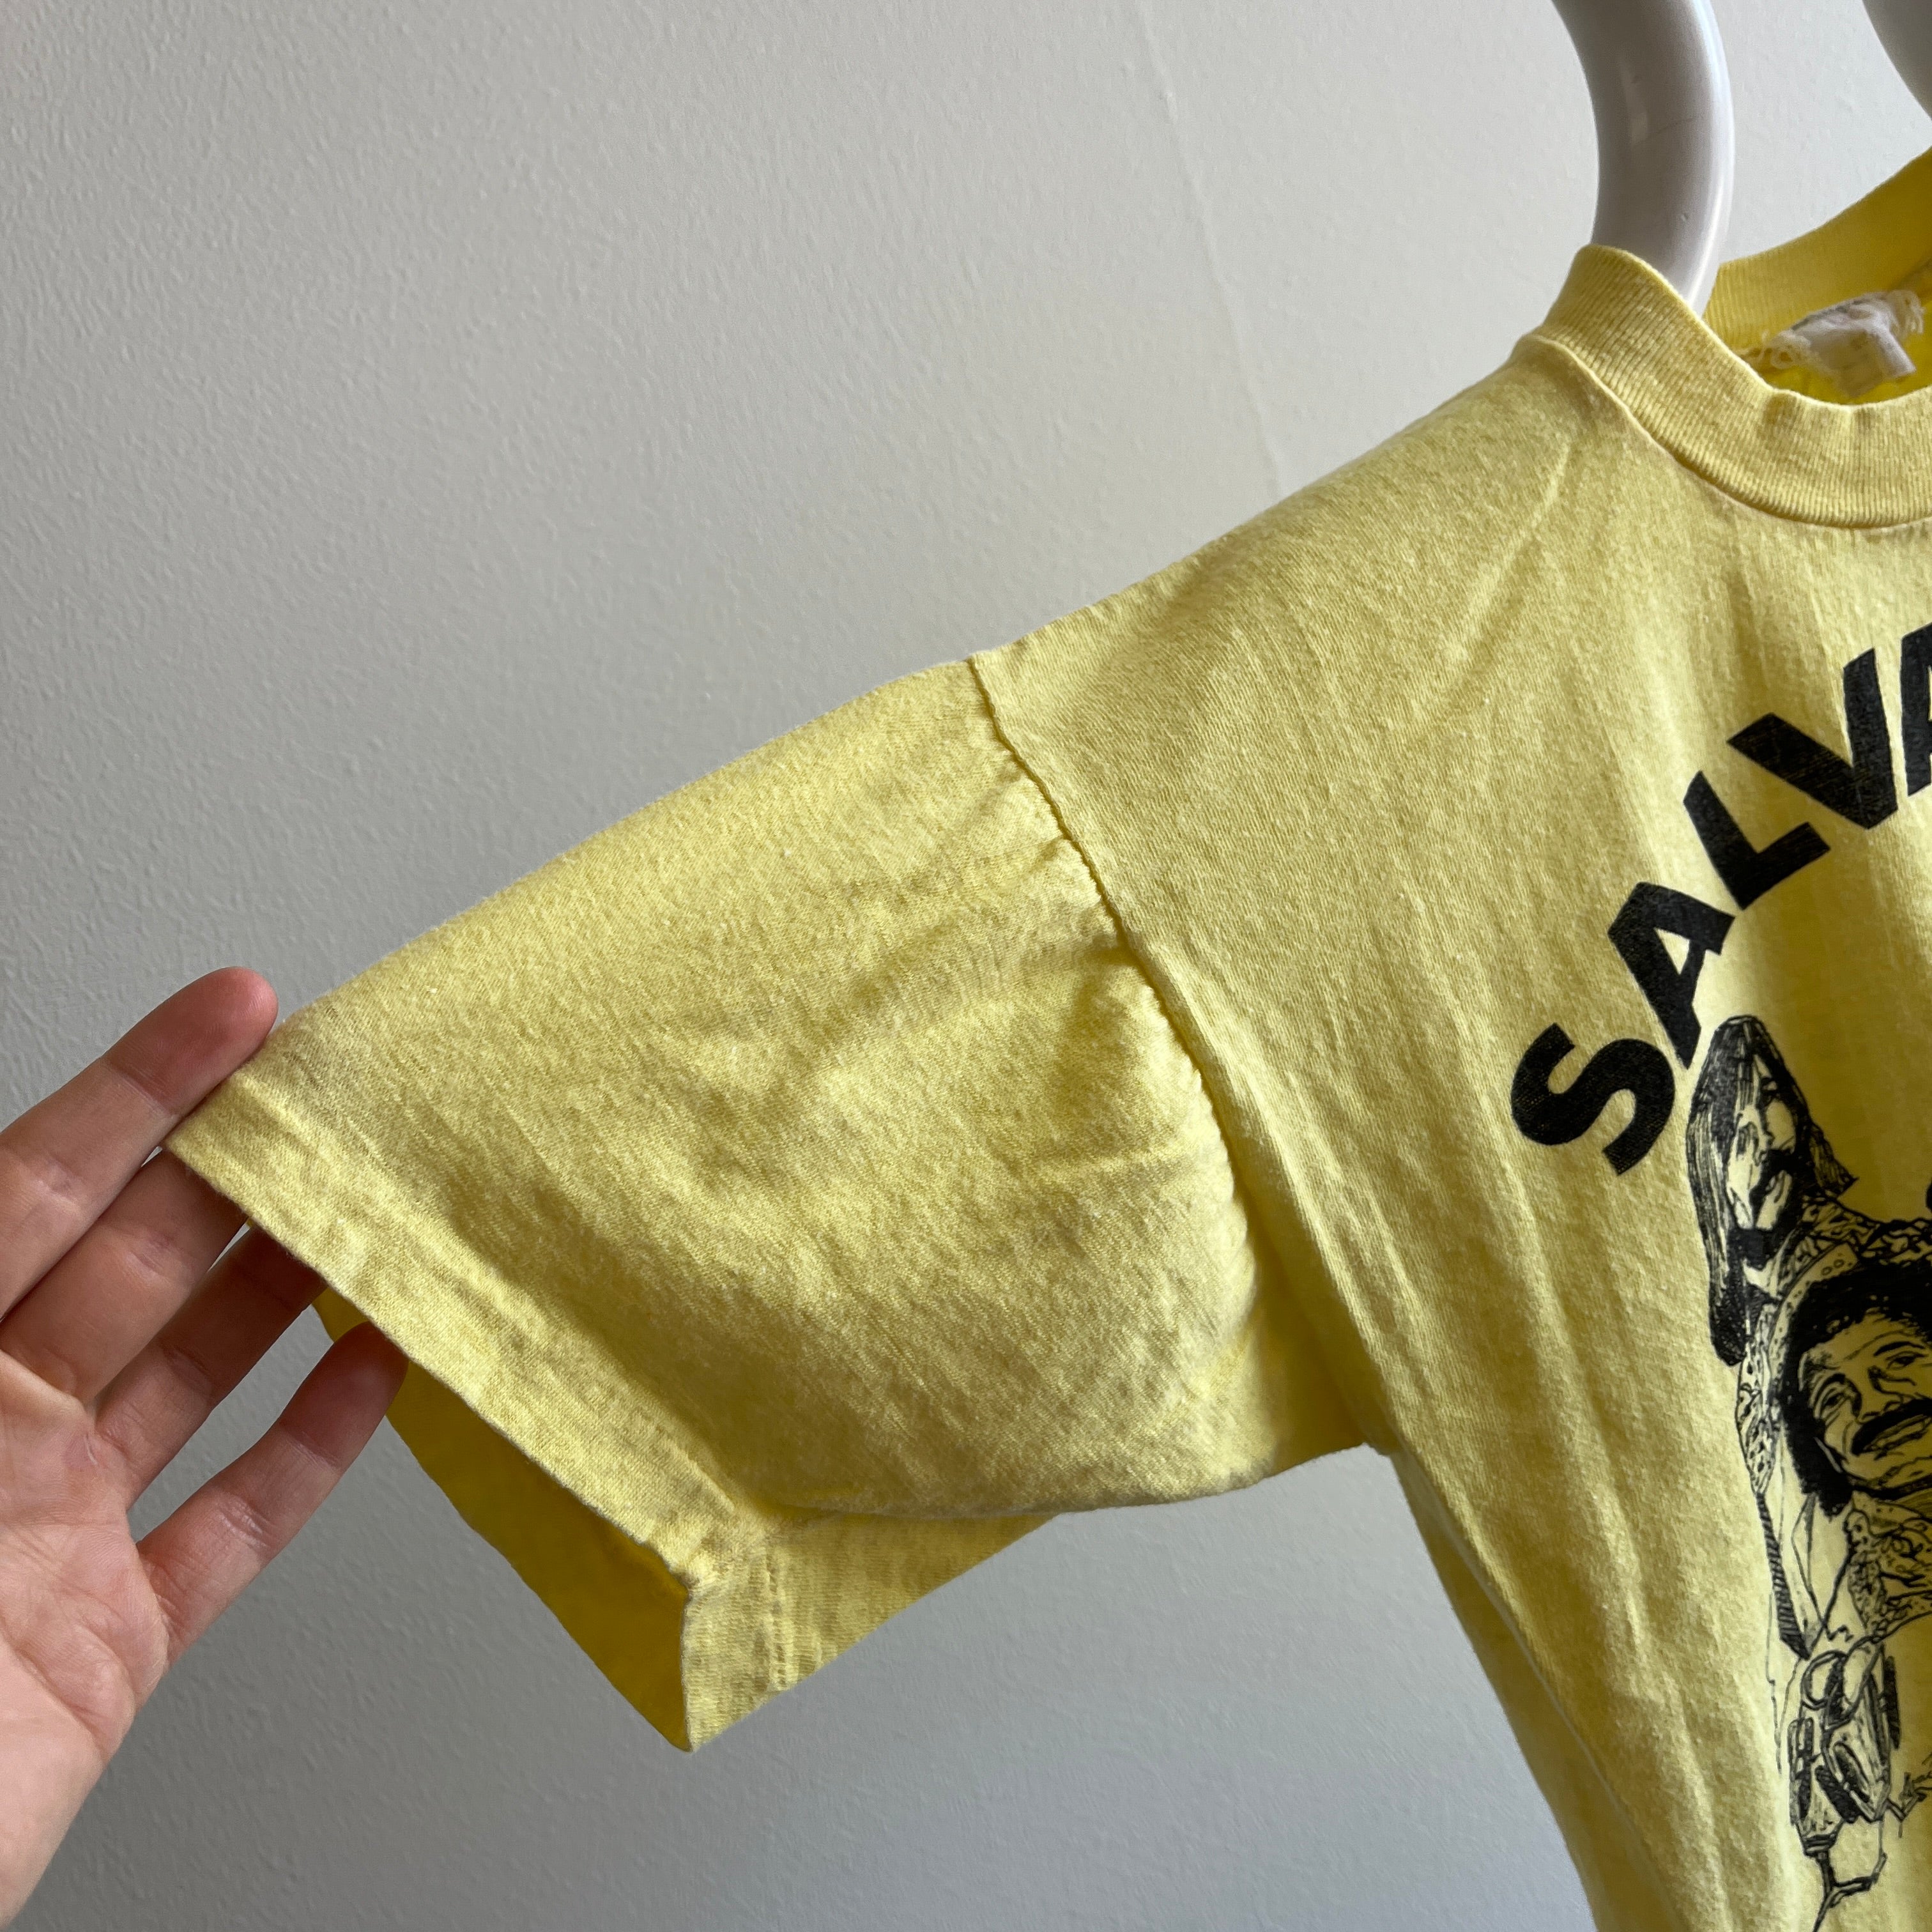 1970s Salvation Band (?) T-Shirt